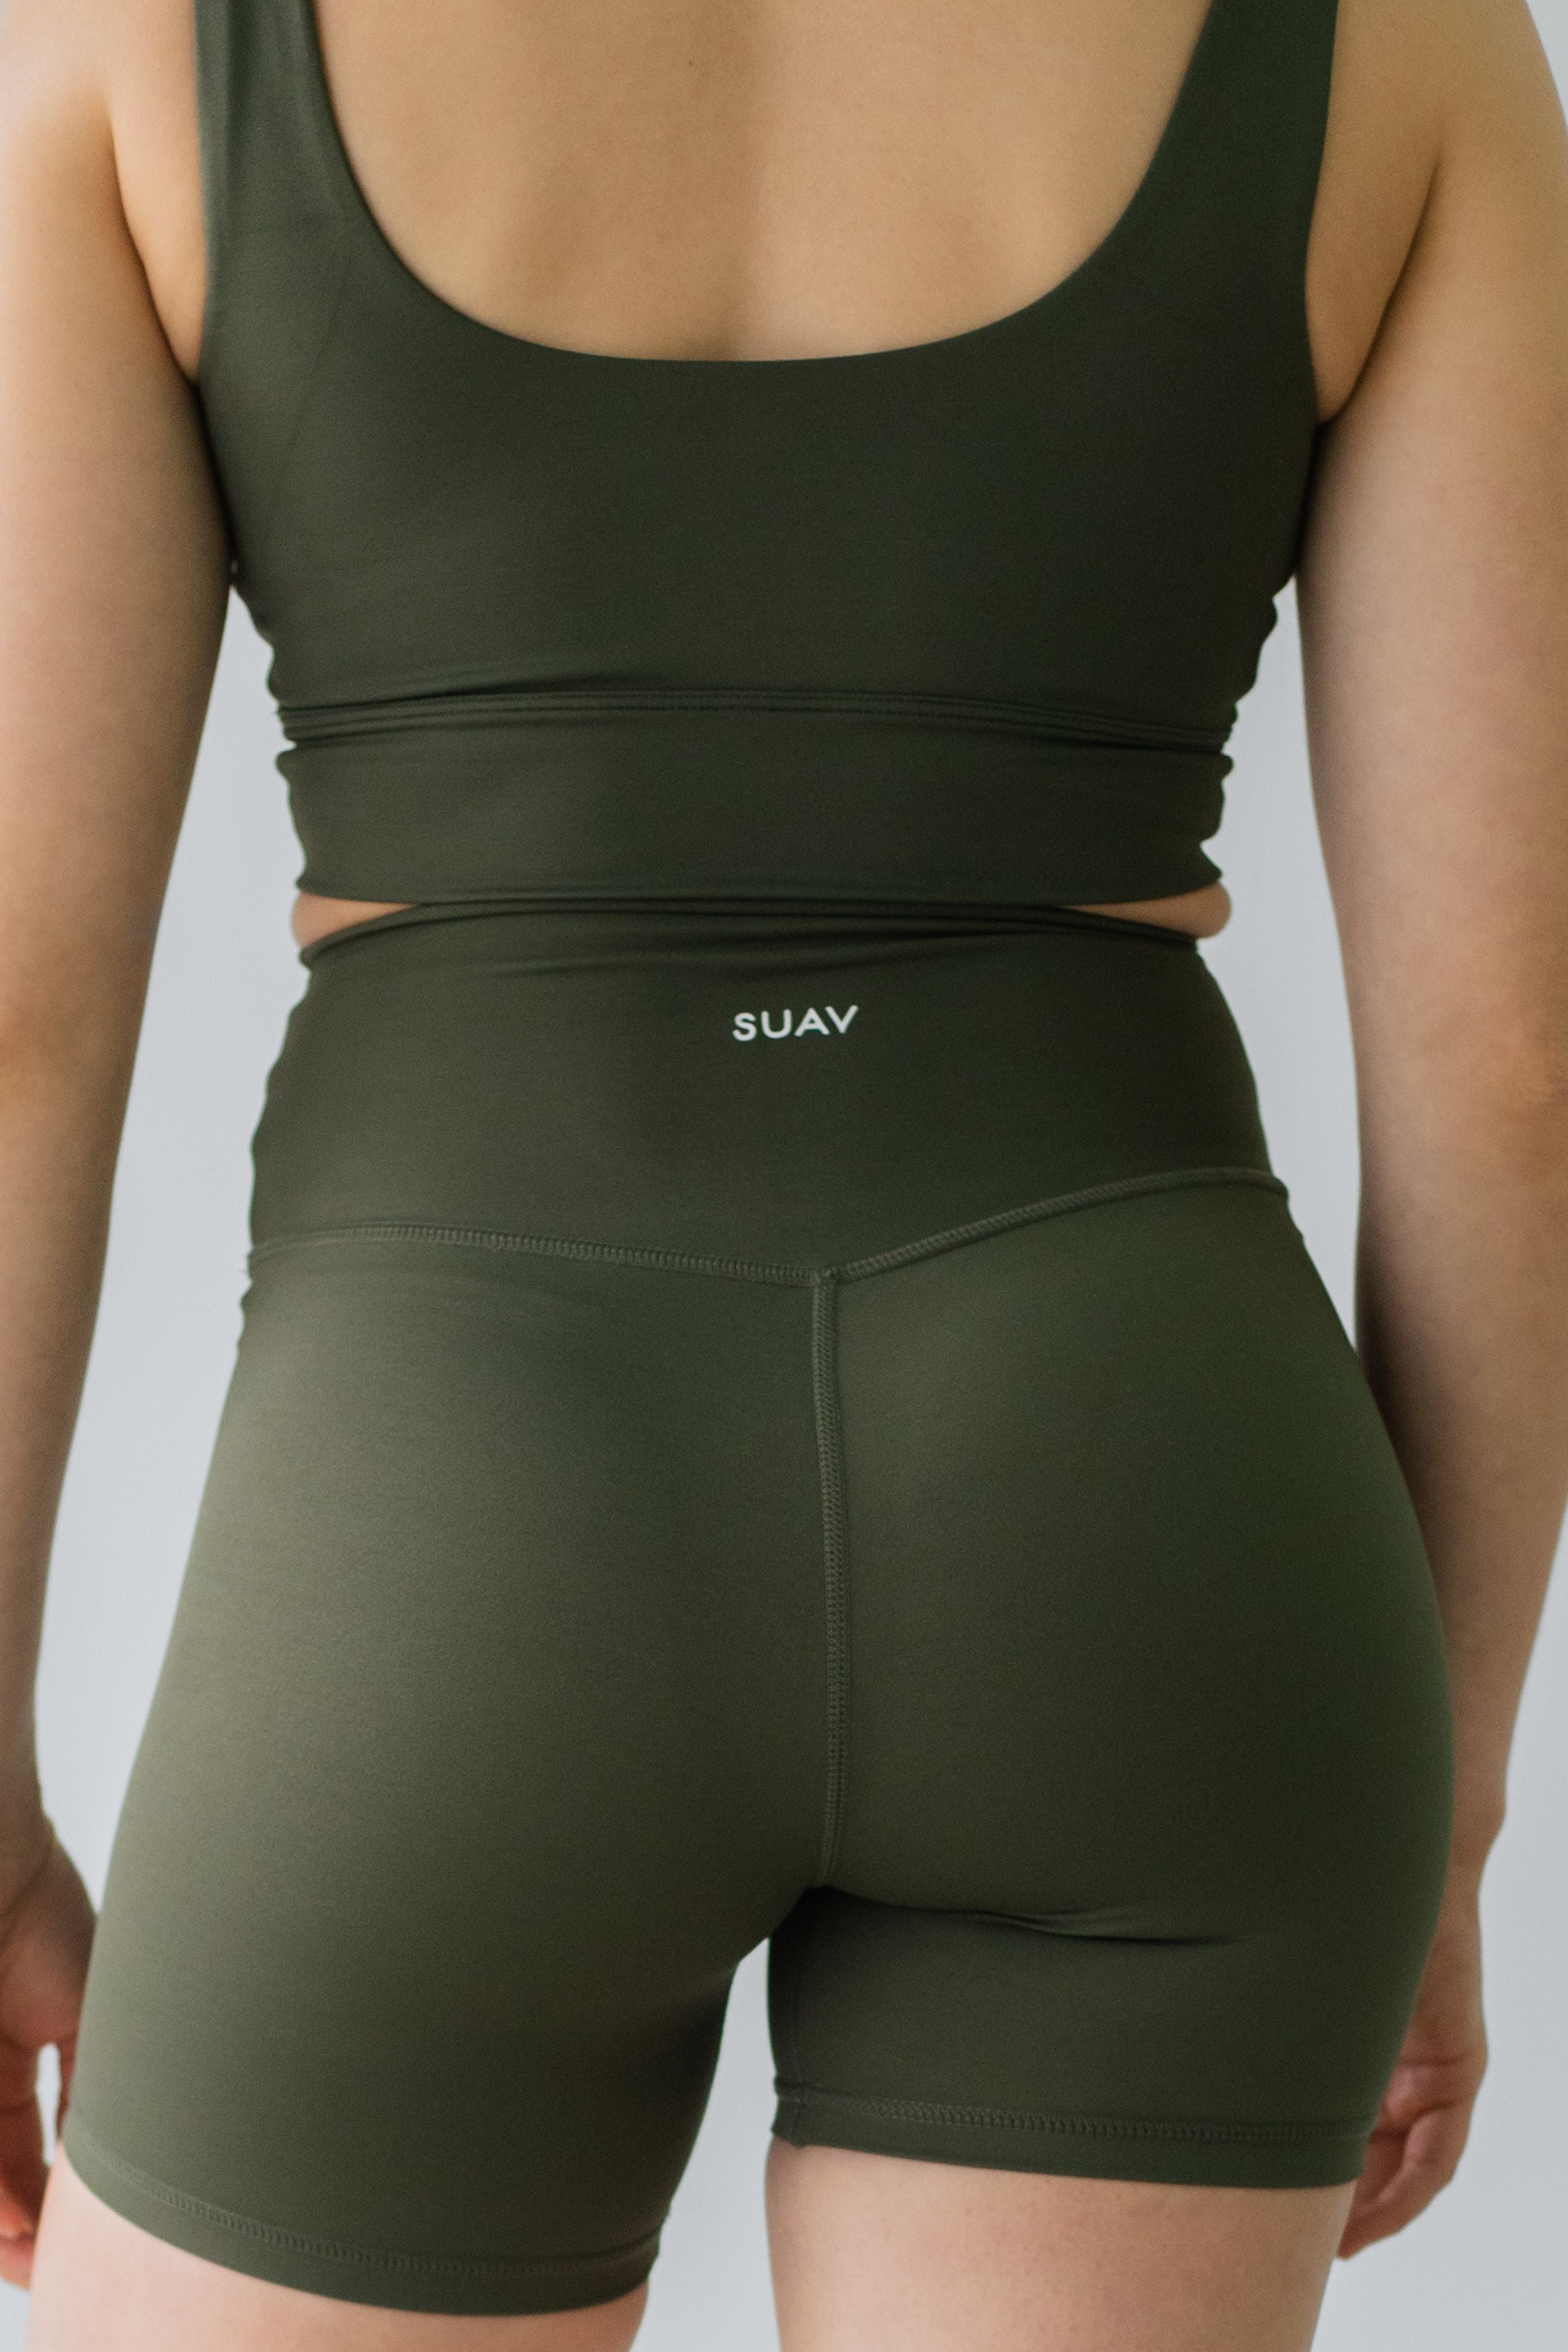 Form Bra in Jet Black – Suav activewear